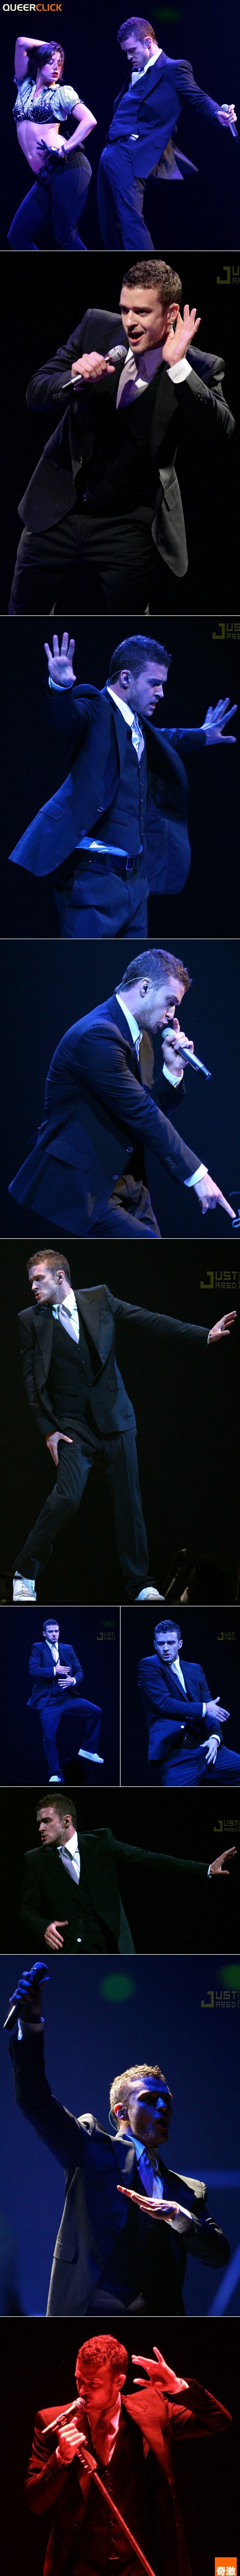 Justin Timberlake Australia Concert